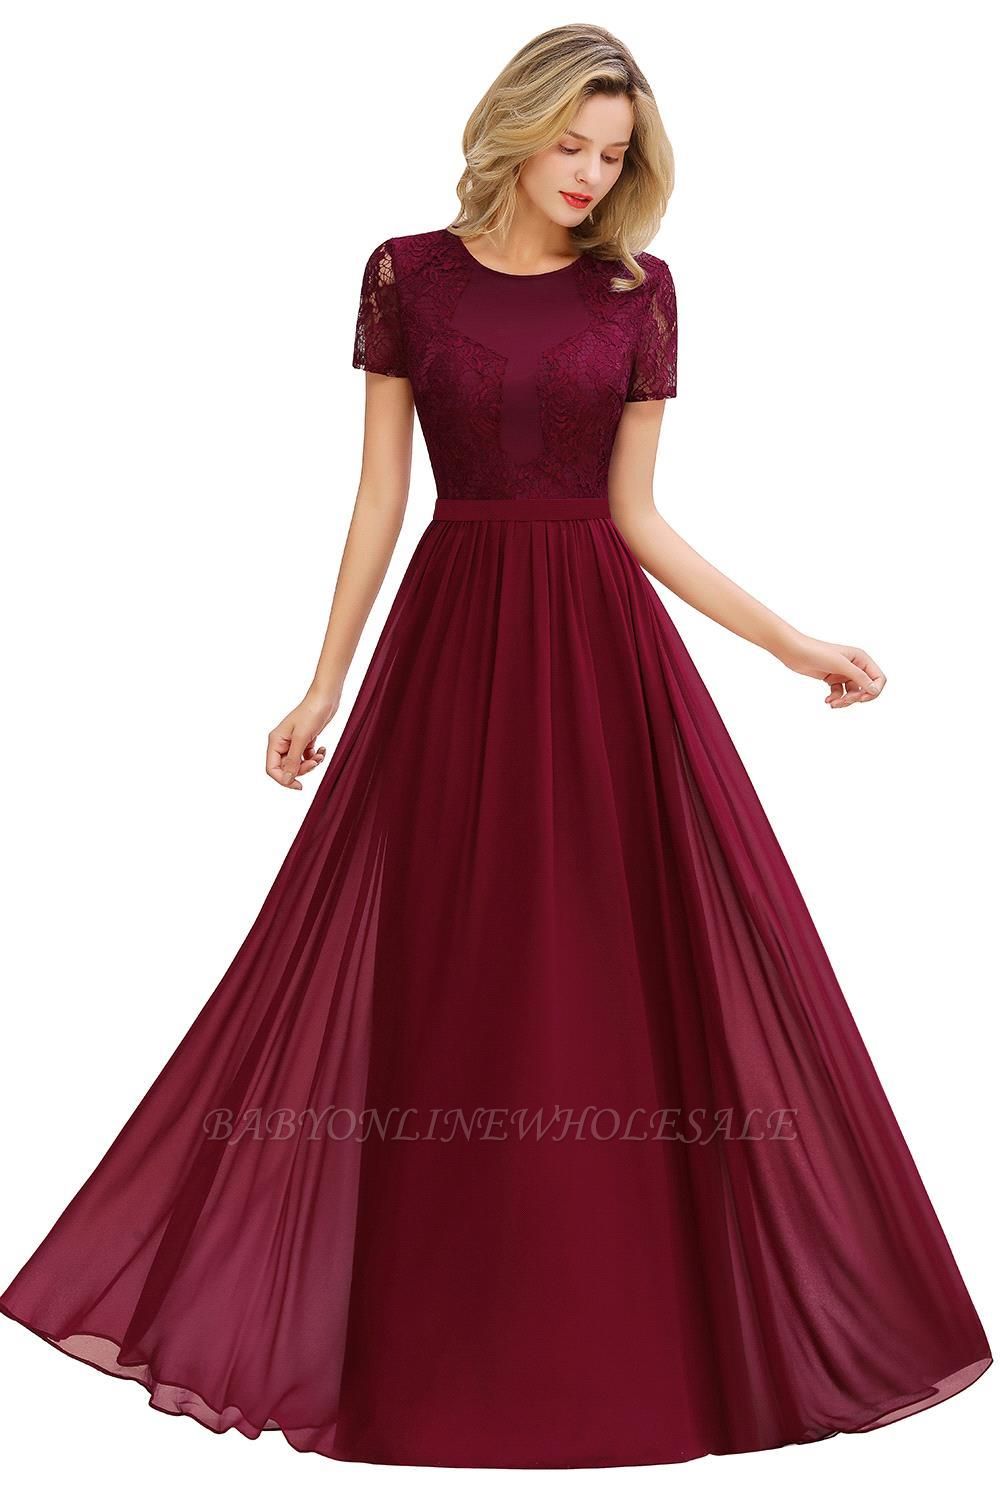 Abraham | Burgundy Short Sleeve Lace Simple Chiffon Formal Dress, Pink, Dark Green